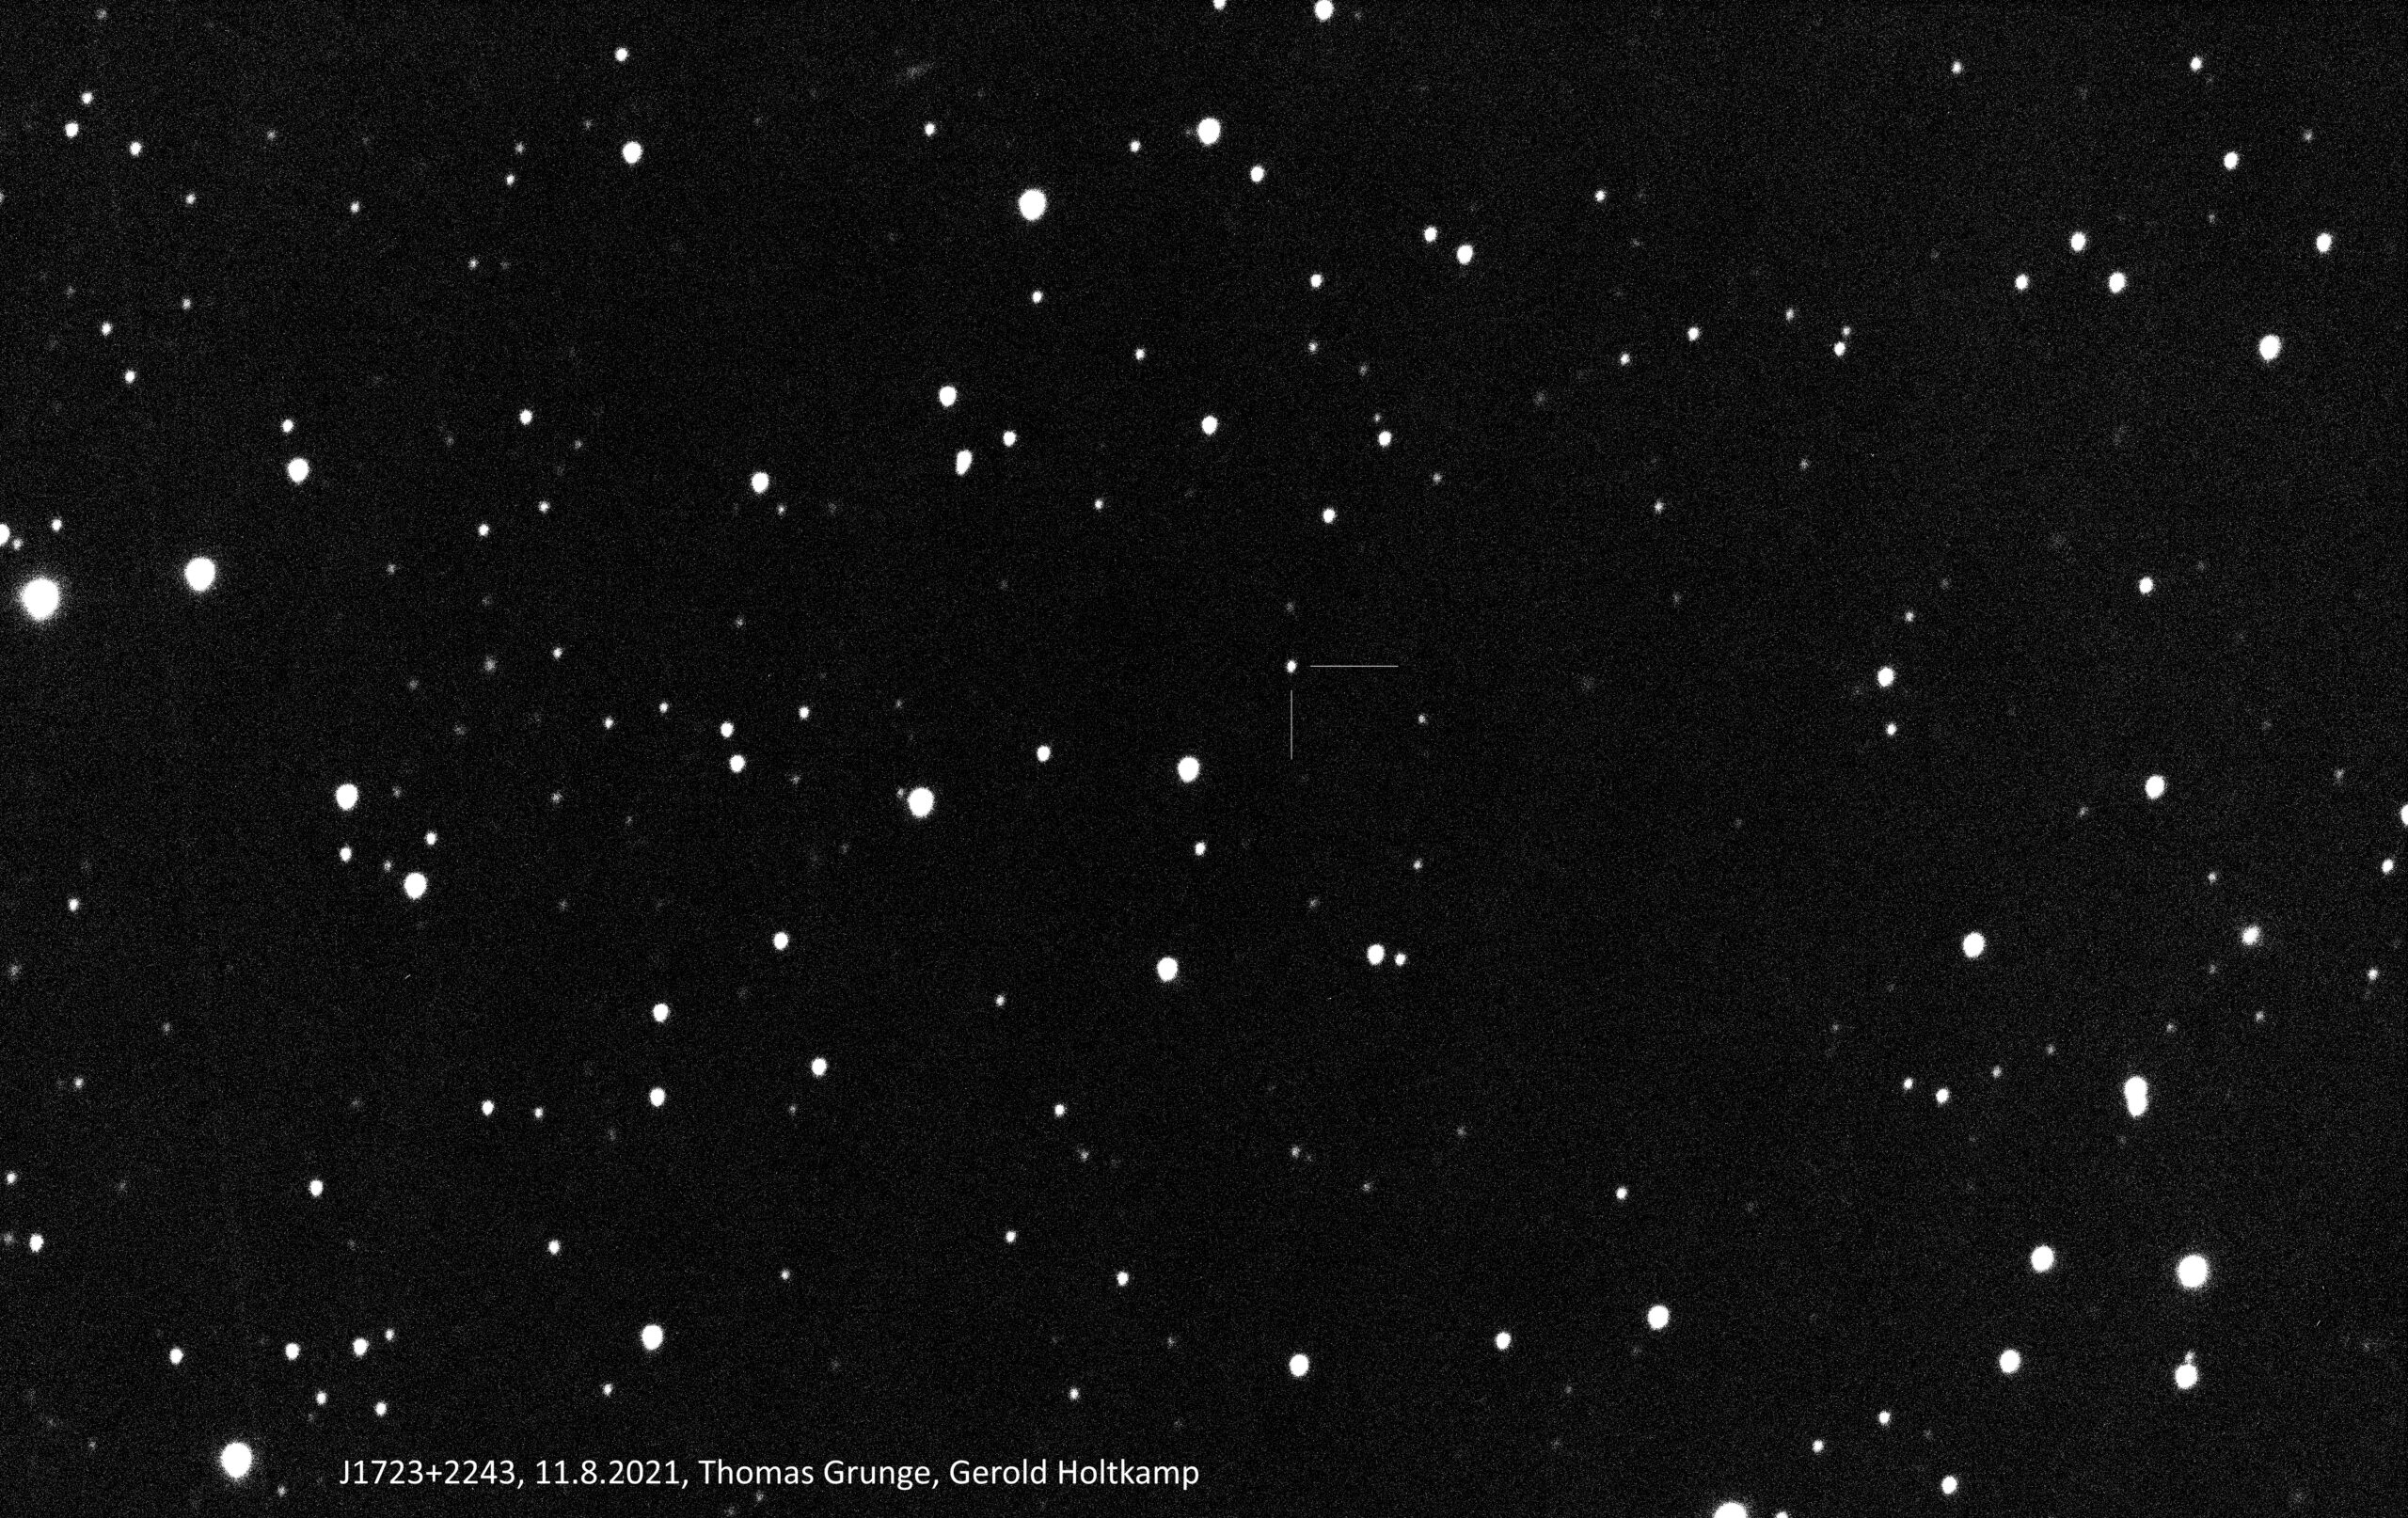 Beobachtung der Quasare QSO J 1723+2243 und SPIT J17210+6017